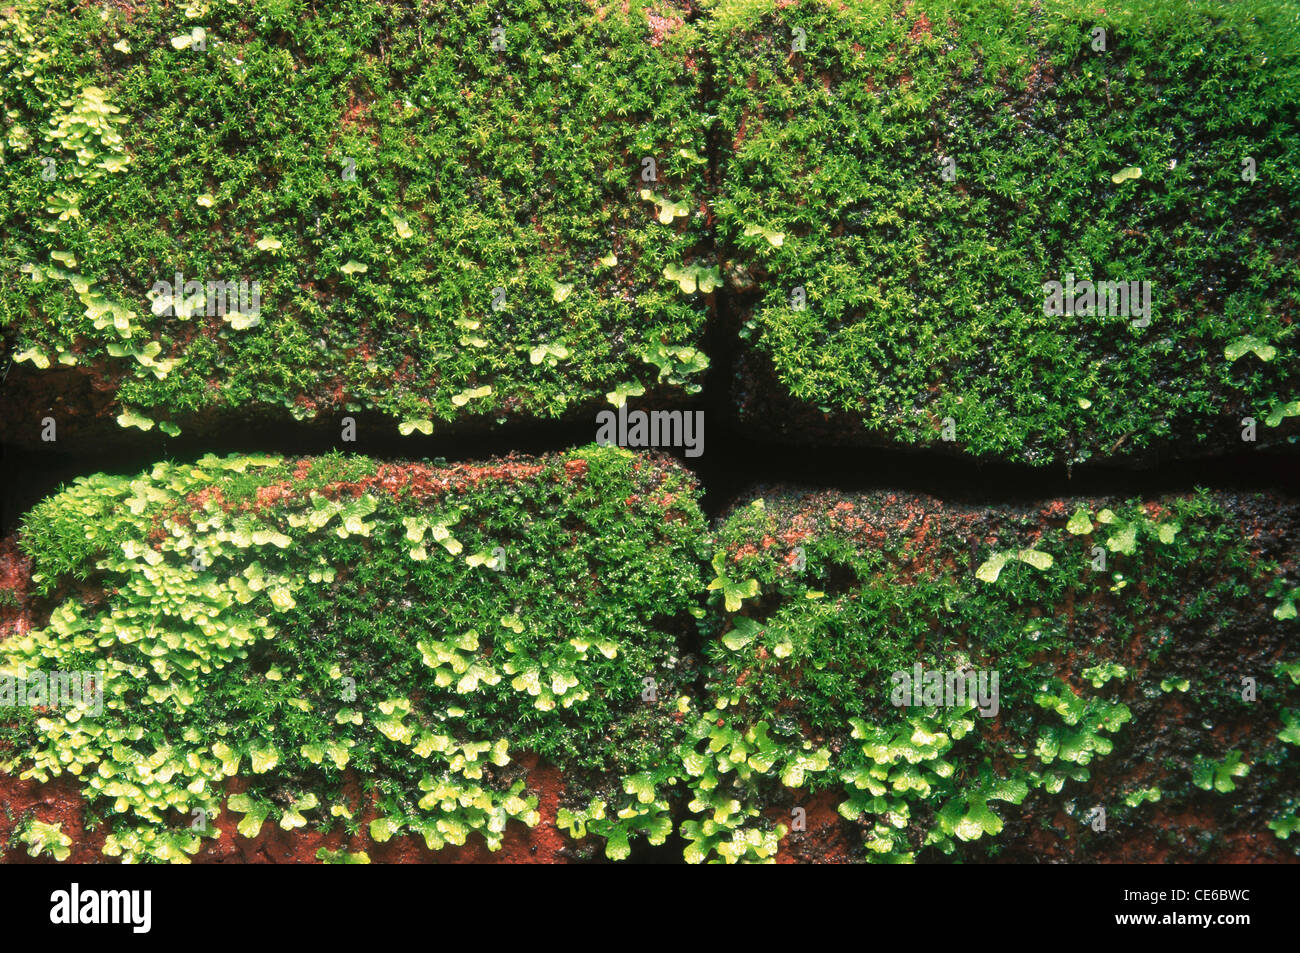 Green moss on bricks ; Stock Photo